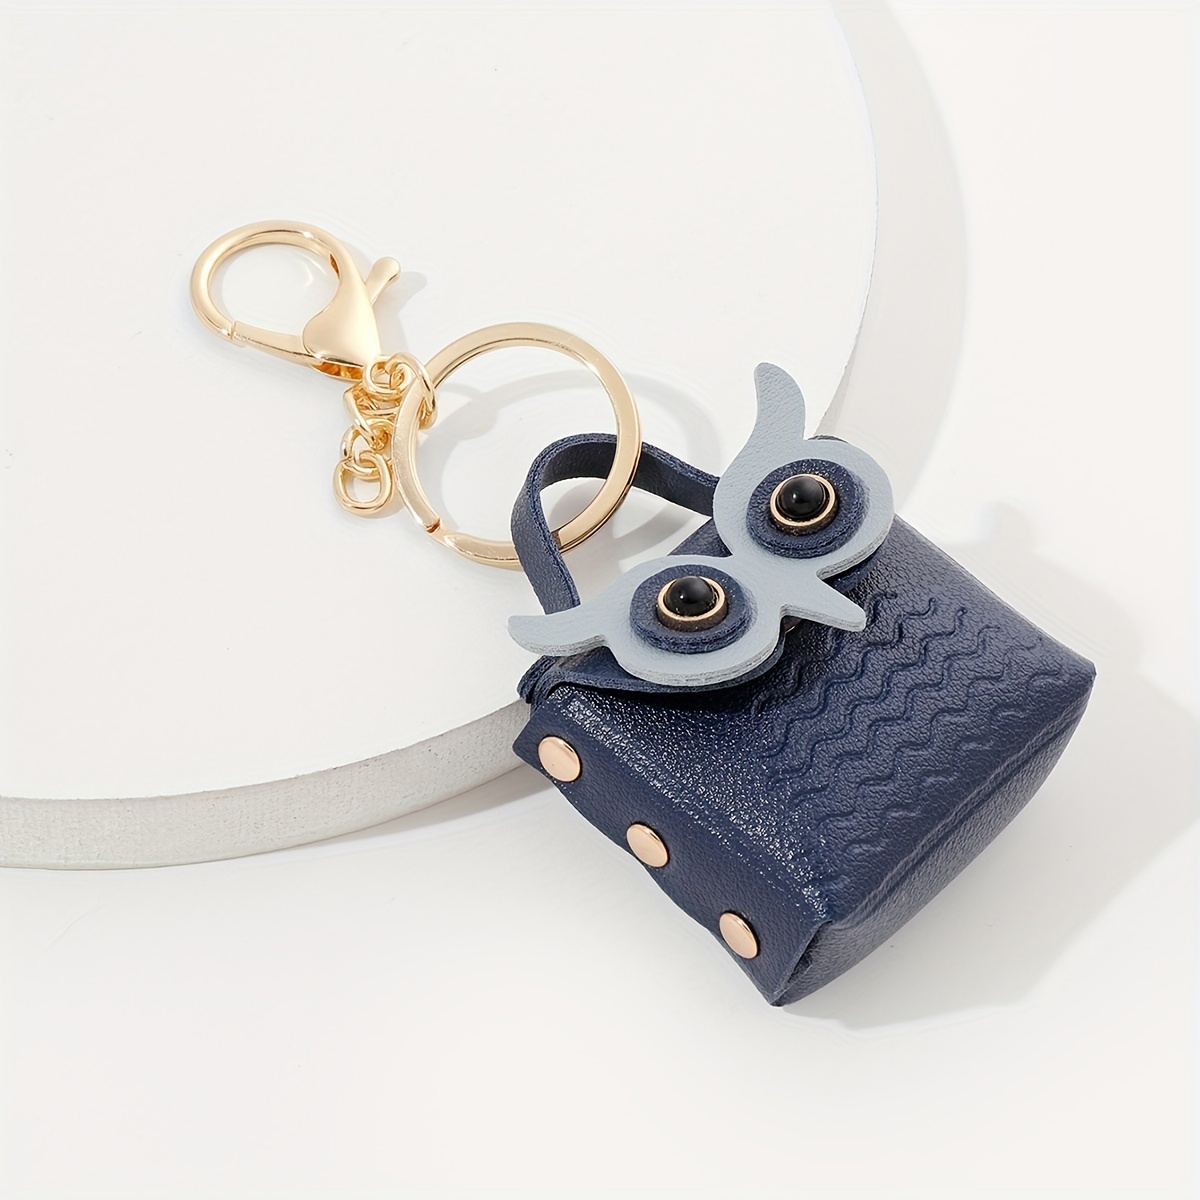 Louis Vuitton owl bag charm  Owl bag, Diy clutch bag, Bag charm